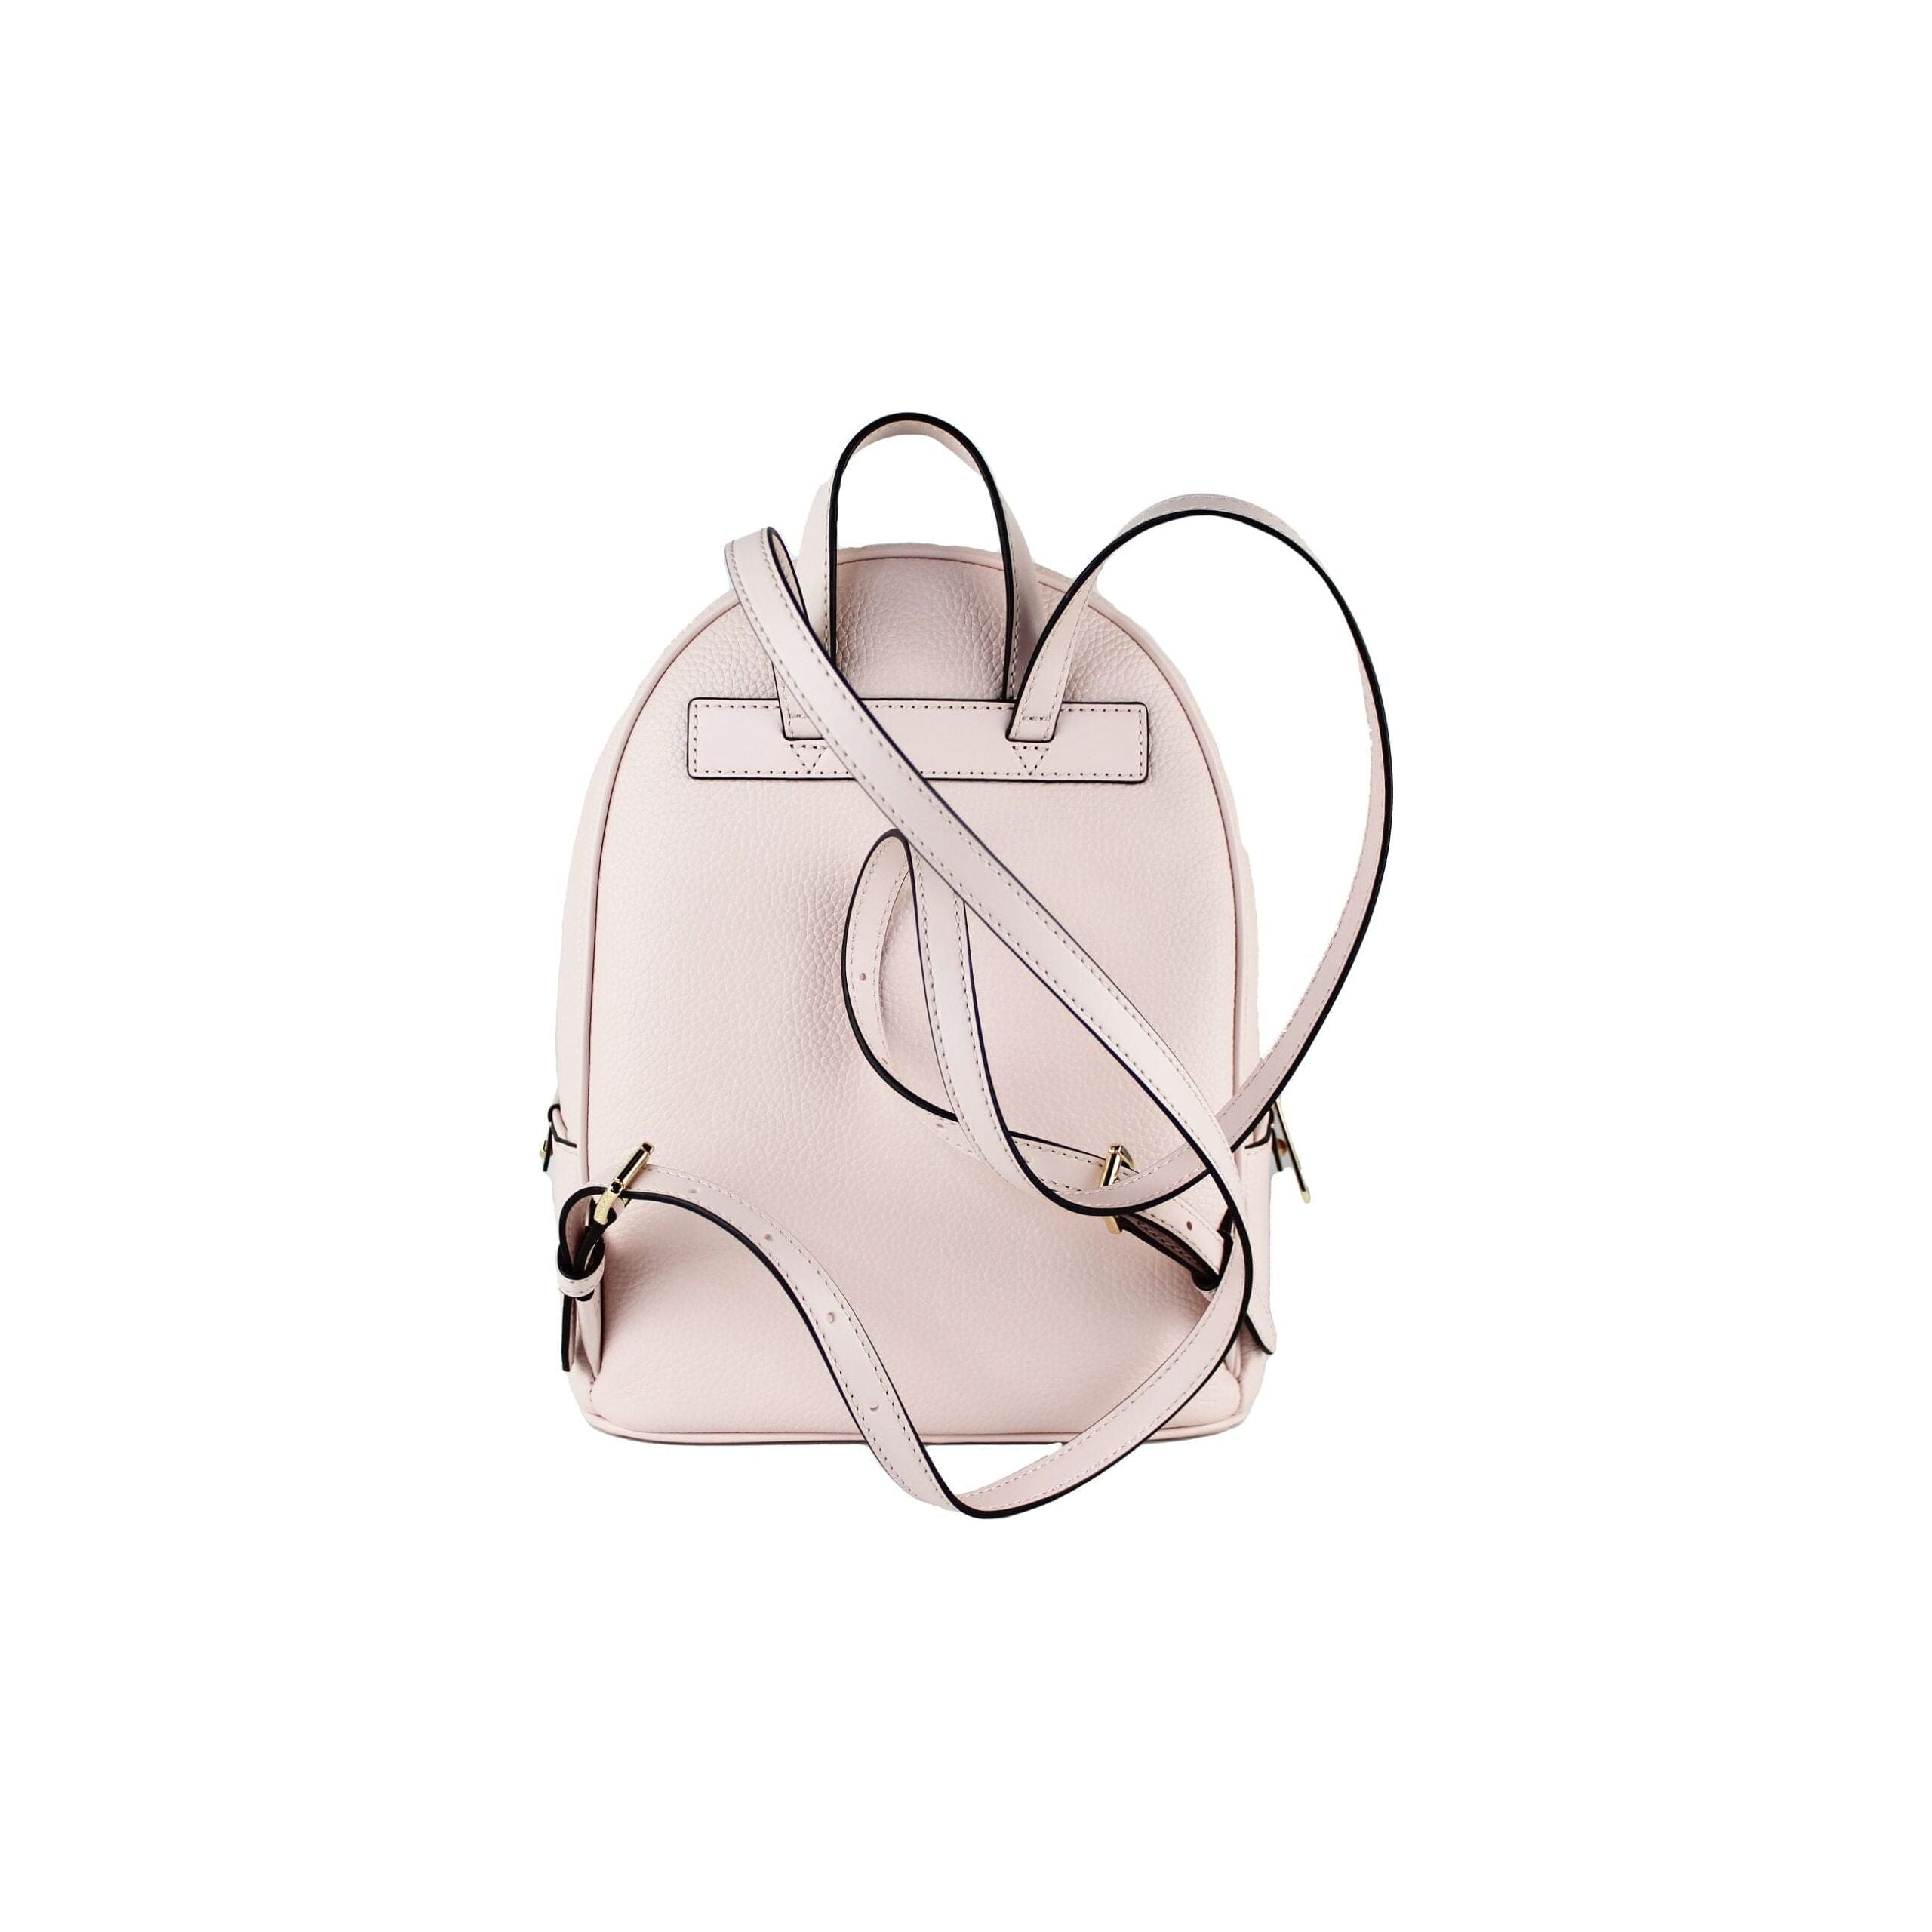 Michael Kors Adina Medium Powder Blush Leather Convertible Backpack BookBag - OBY BAGS